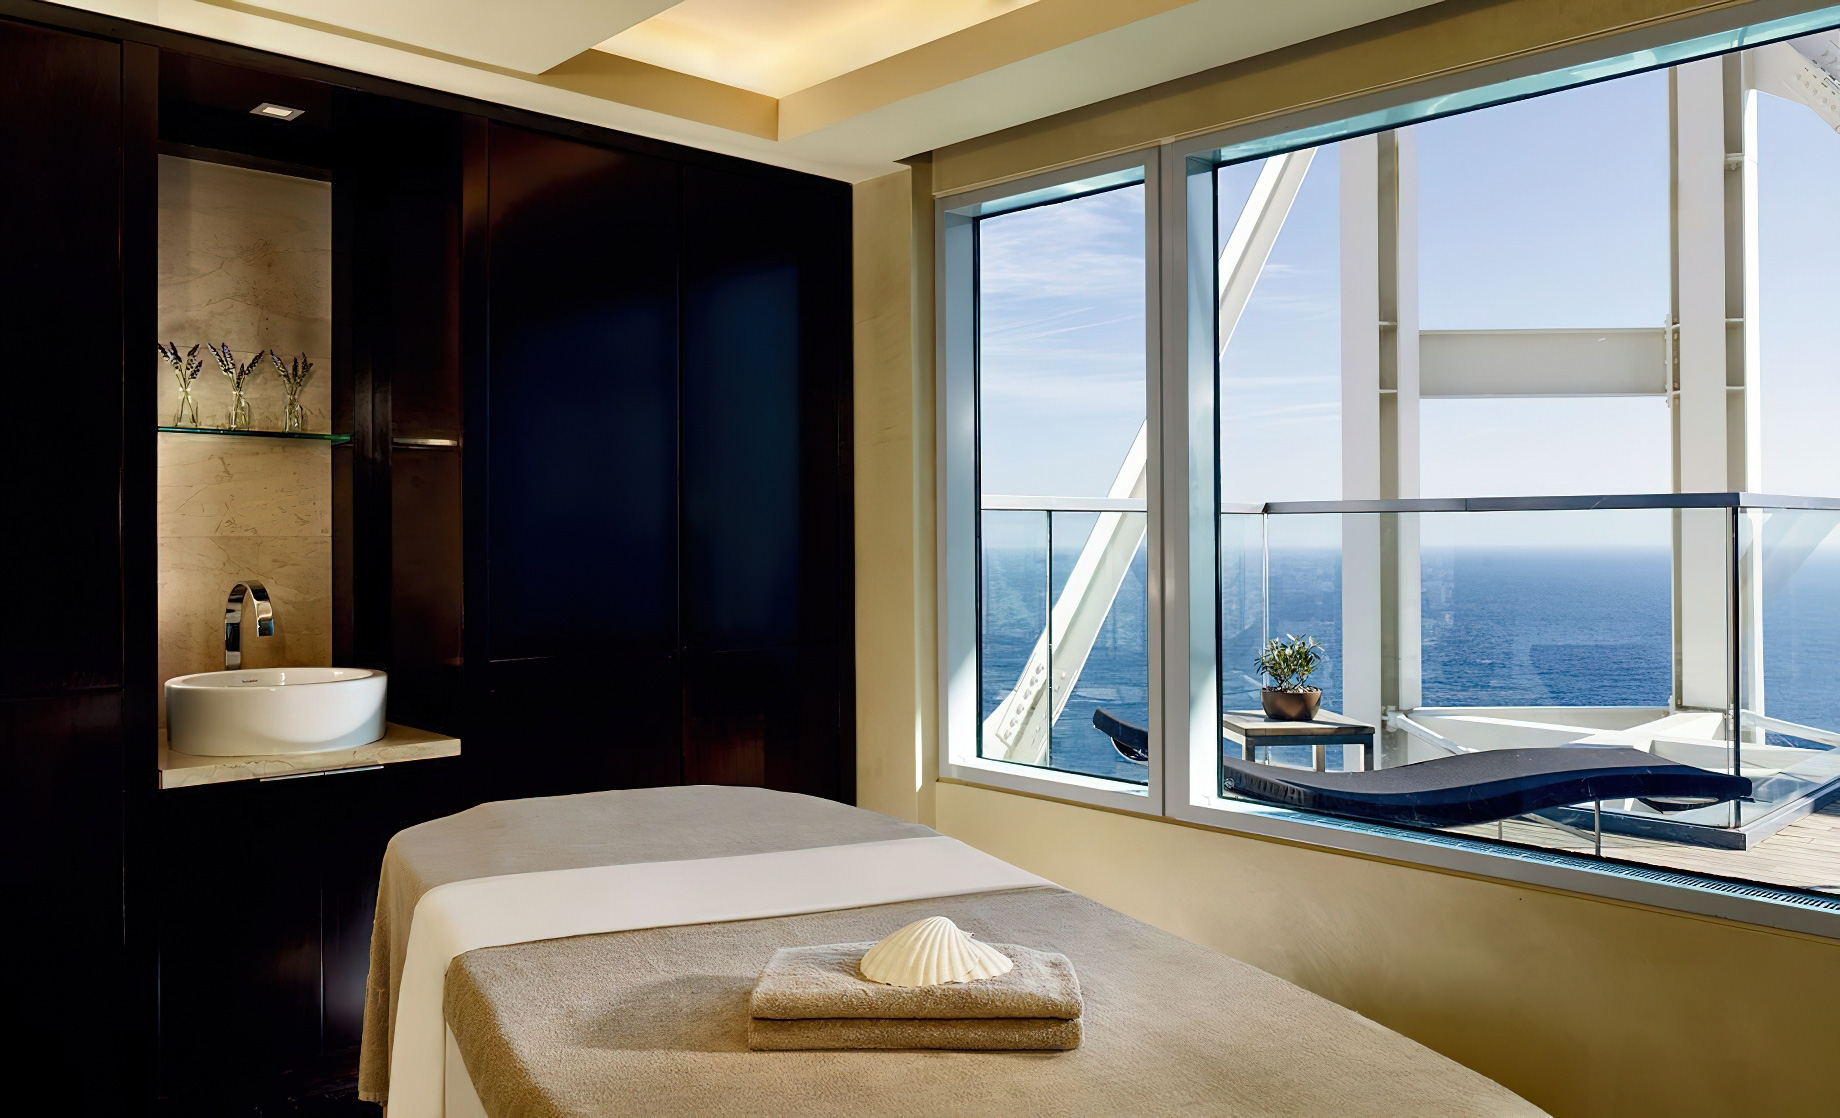 Hotel Arts Barcelona Ritz-Carlton - Barcelona, Spain - Spa Treatment Table